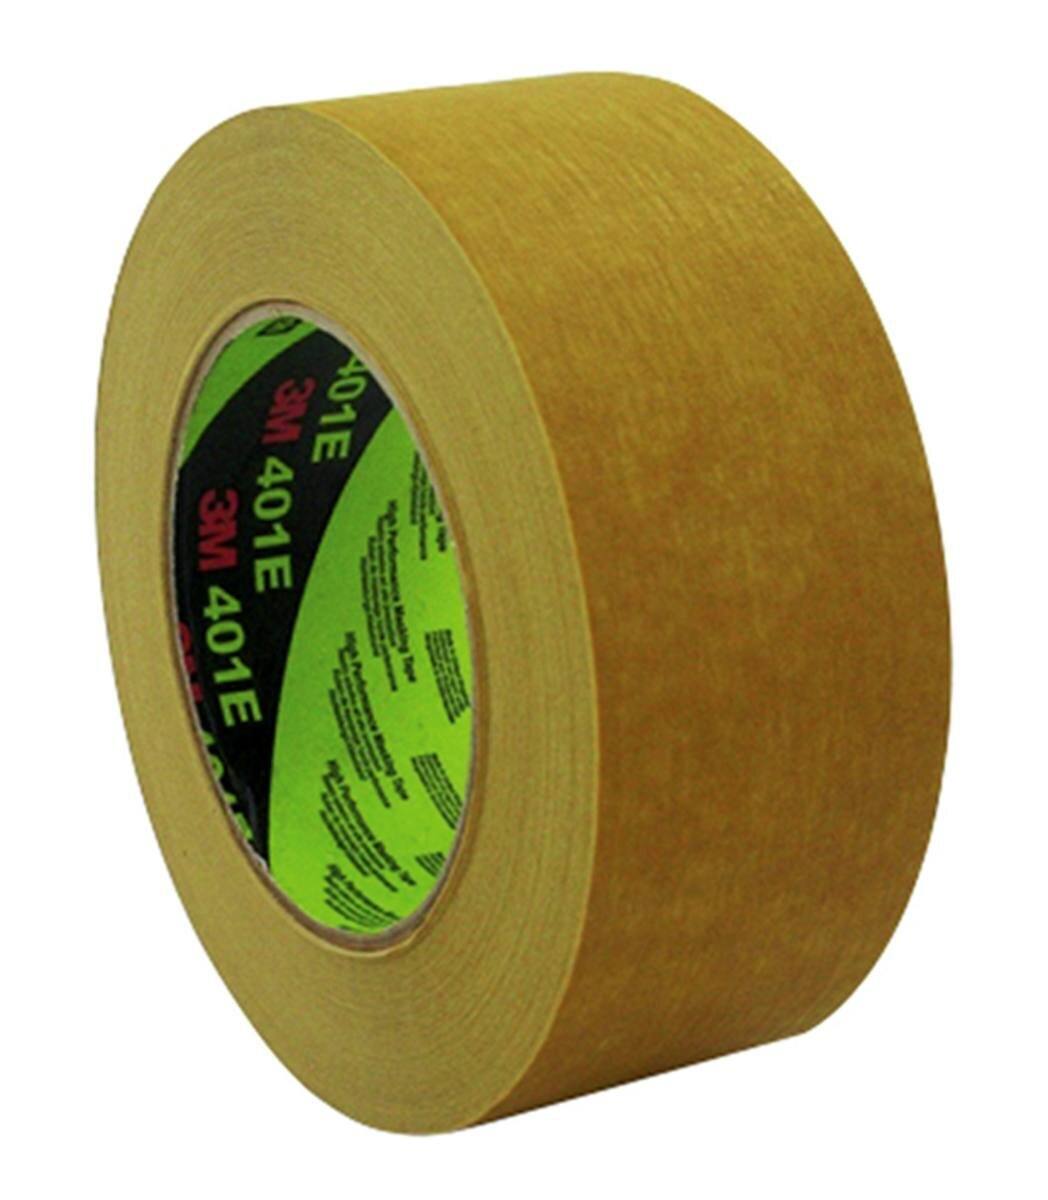 3M Crepe tape 401E, brown, 24 mm x 50 m, 0.160 mm